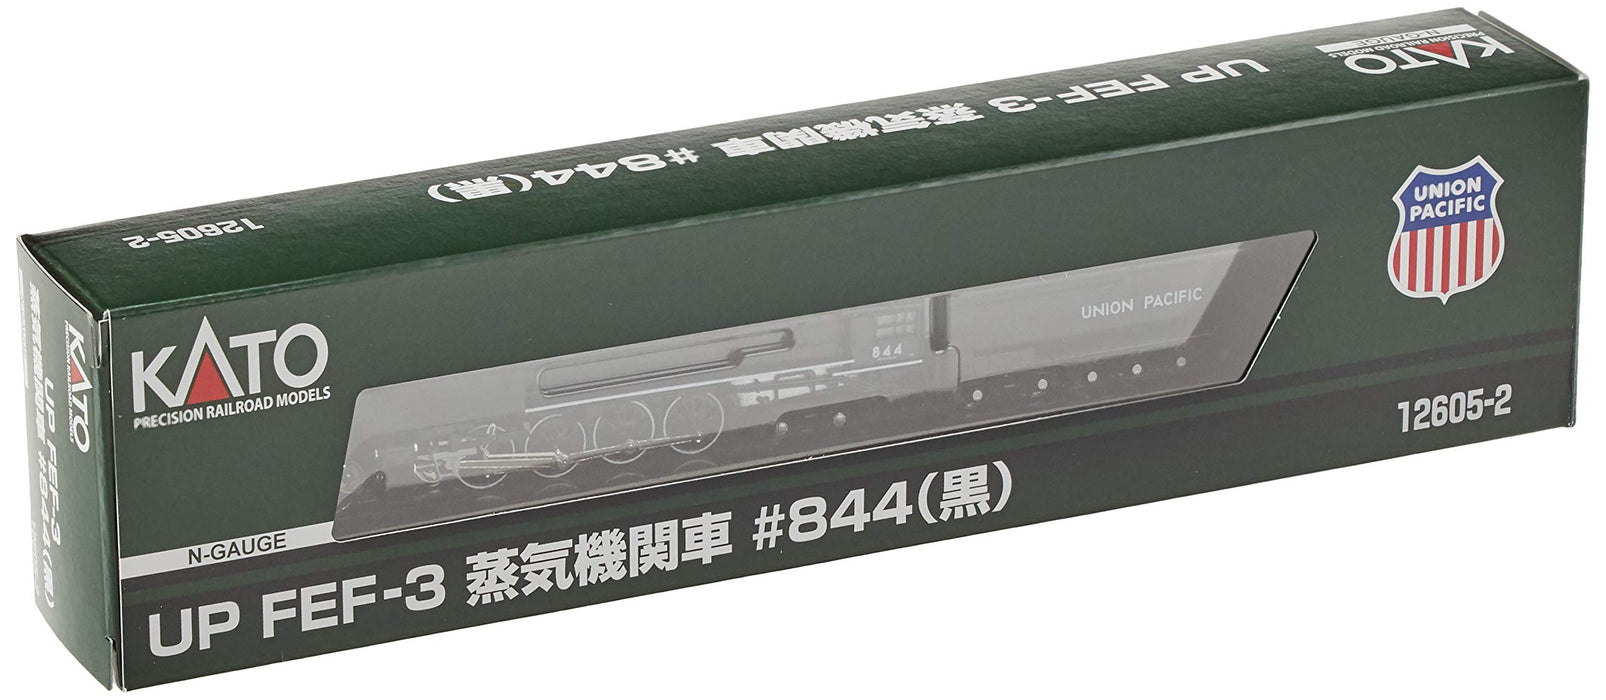 Kato Brand Rail Model Steam Locomotive - Black N Gauge Fef-3 #844 12605-2